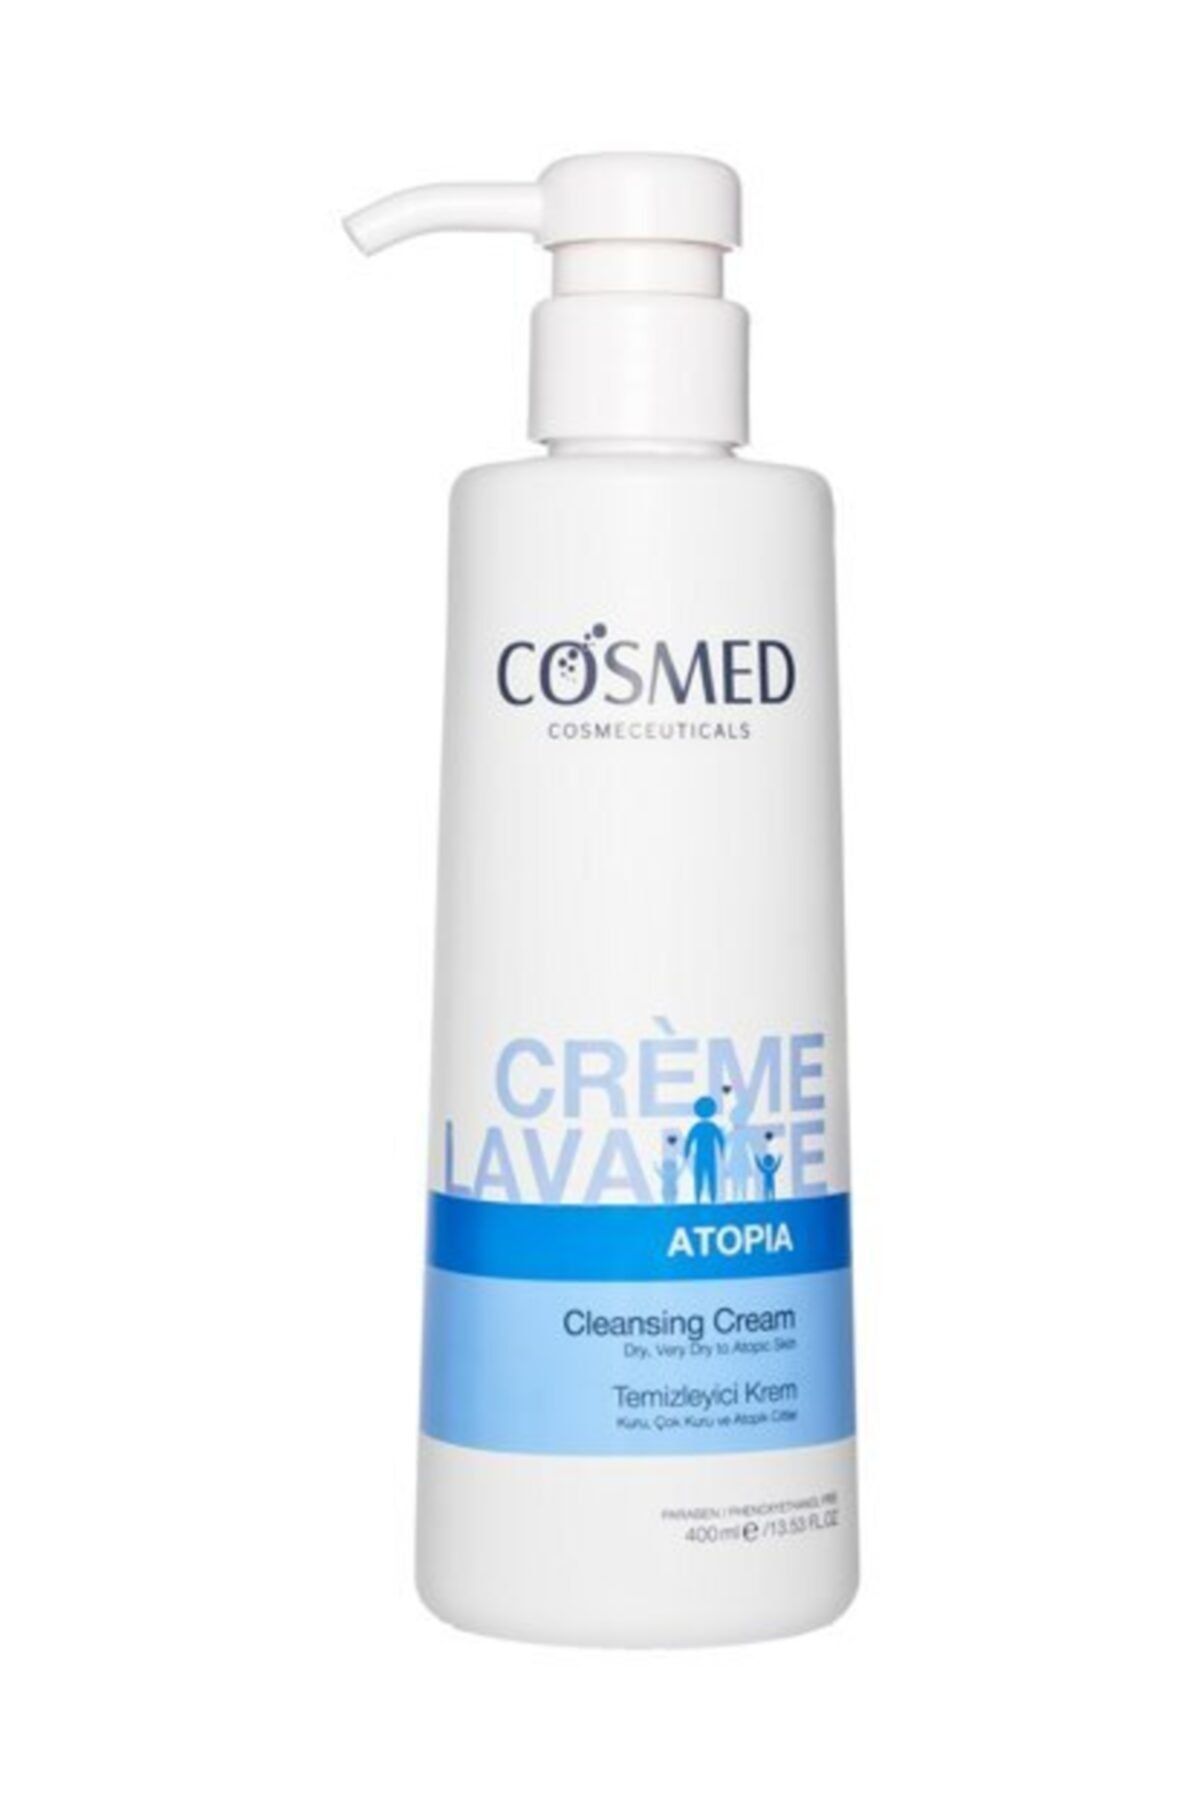 COSMED Atopia Cleansing Cream 400ml - Temizleyici Krem